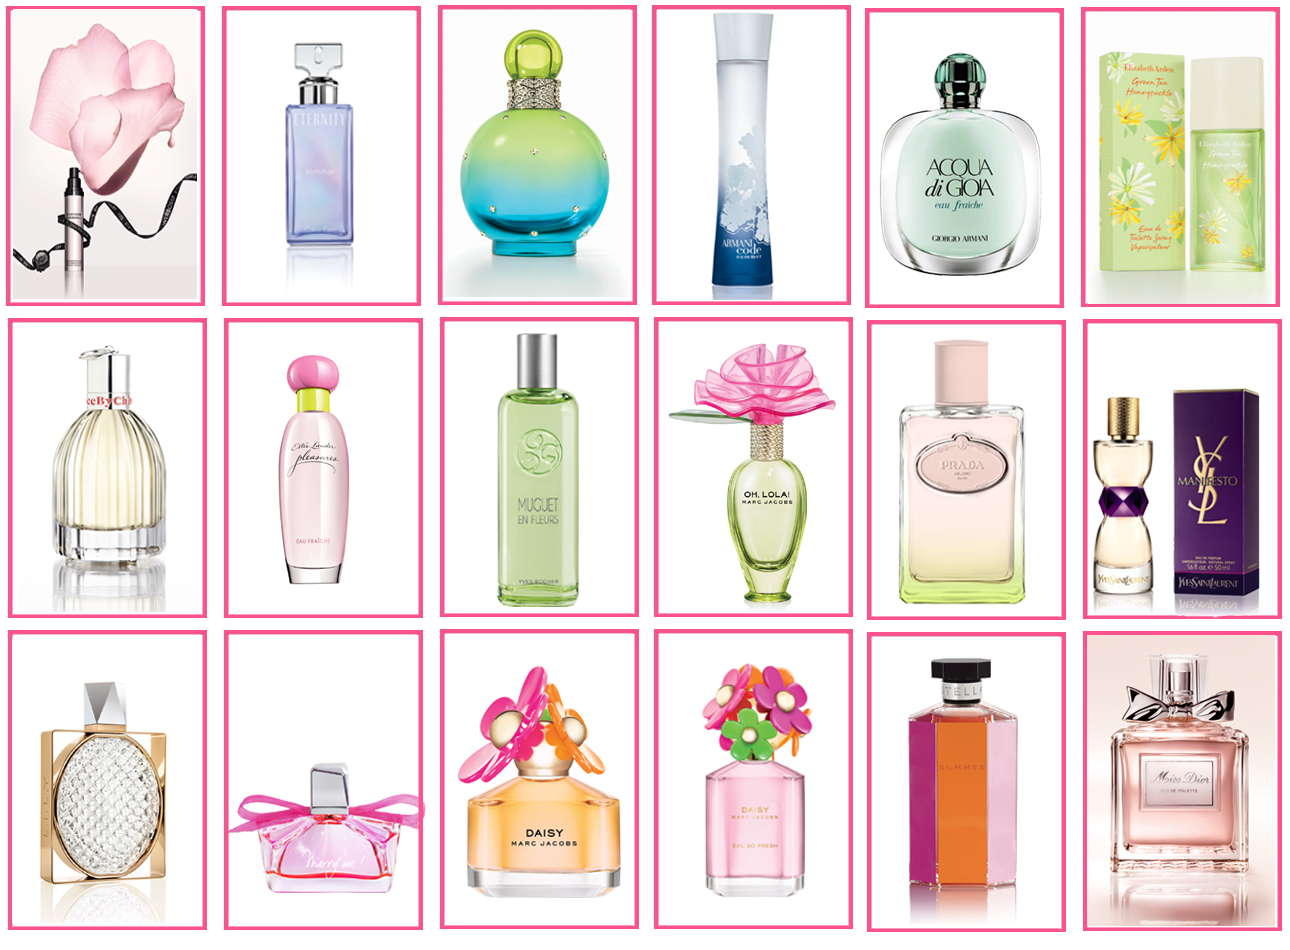 BeautyBlog, 15 nye forårsdufte 2013